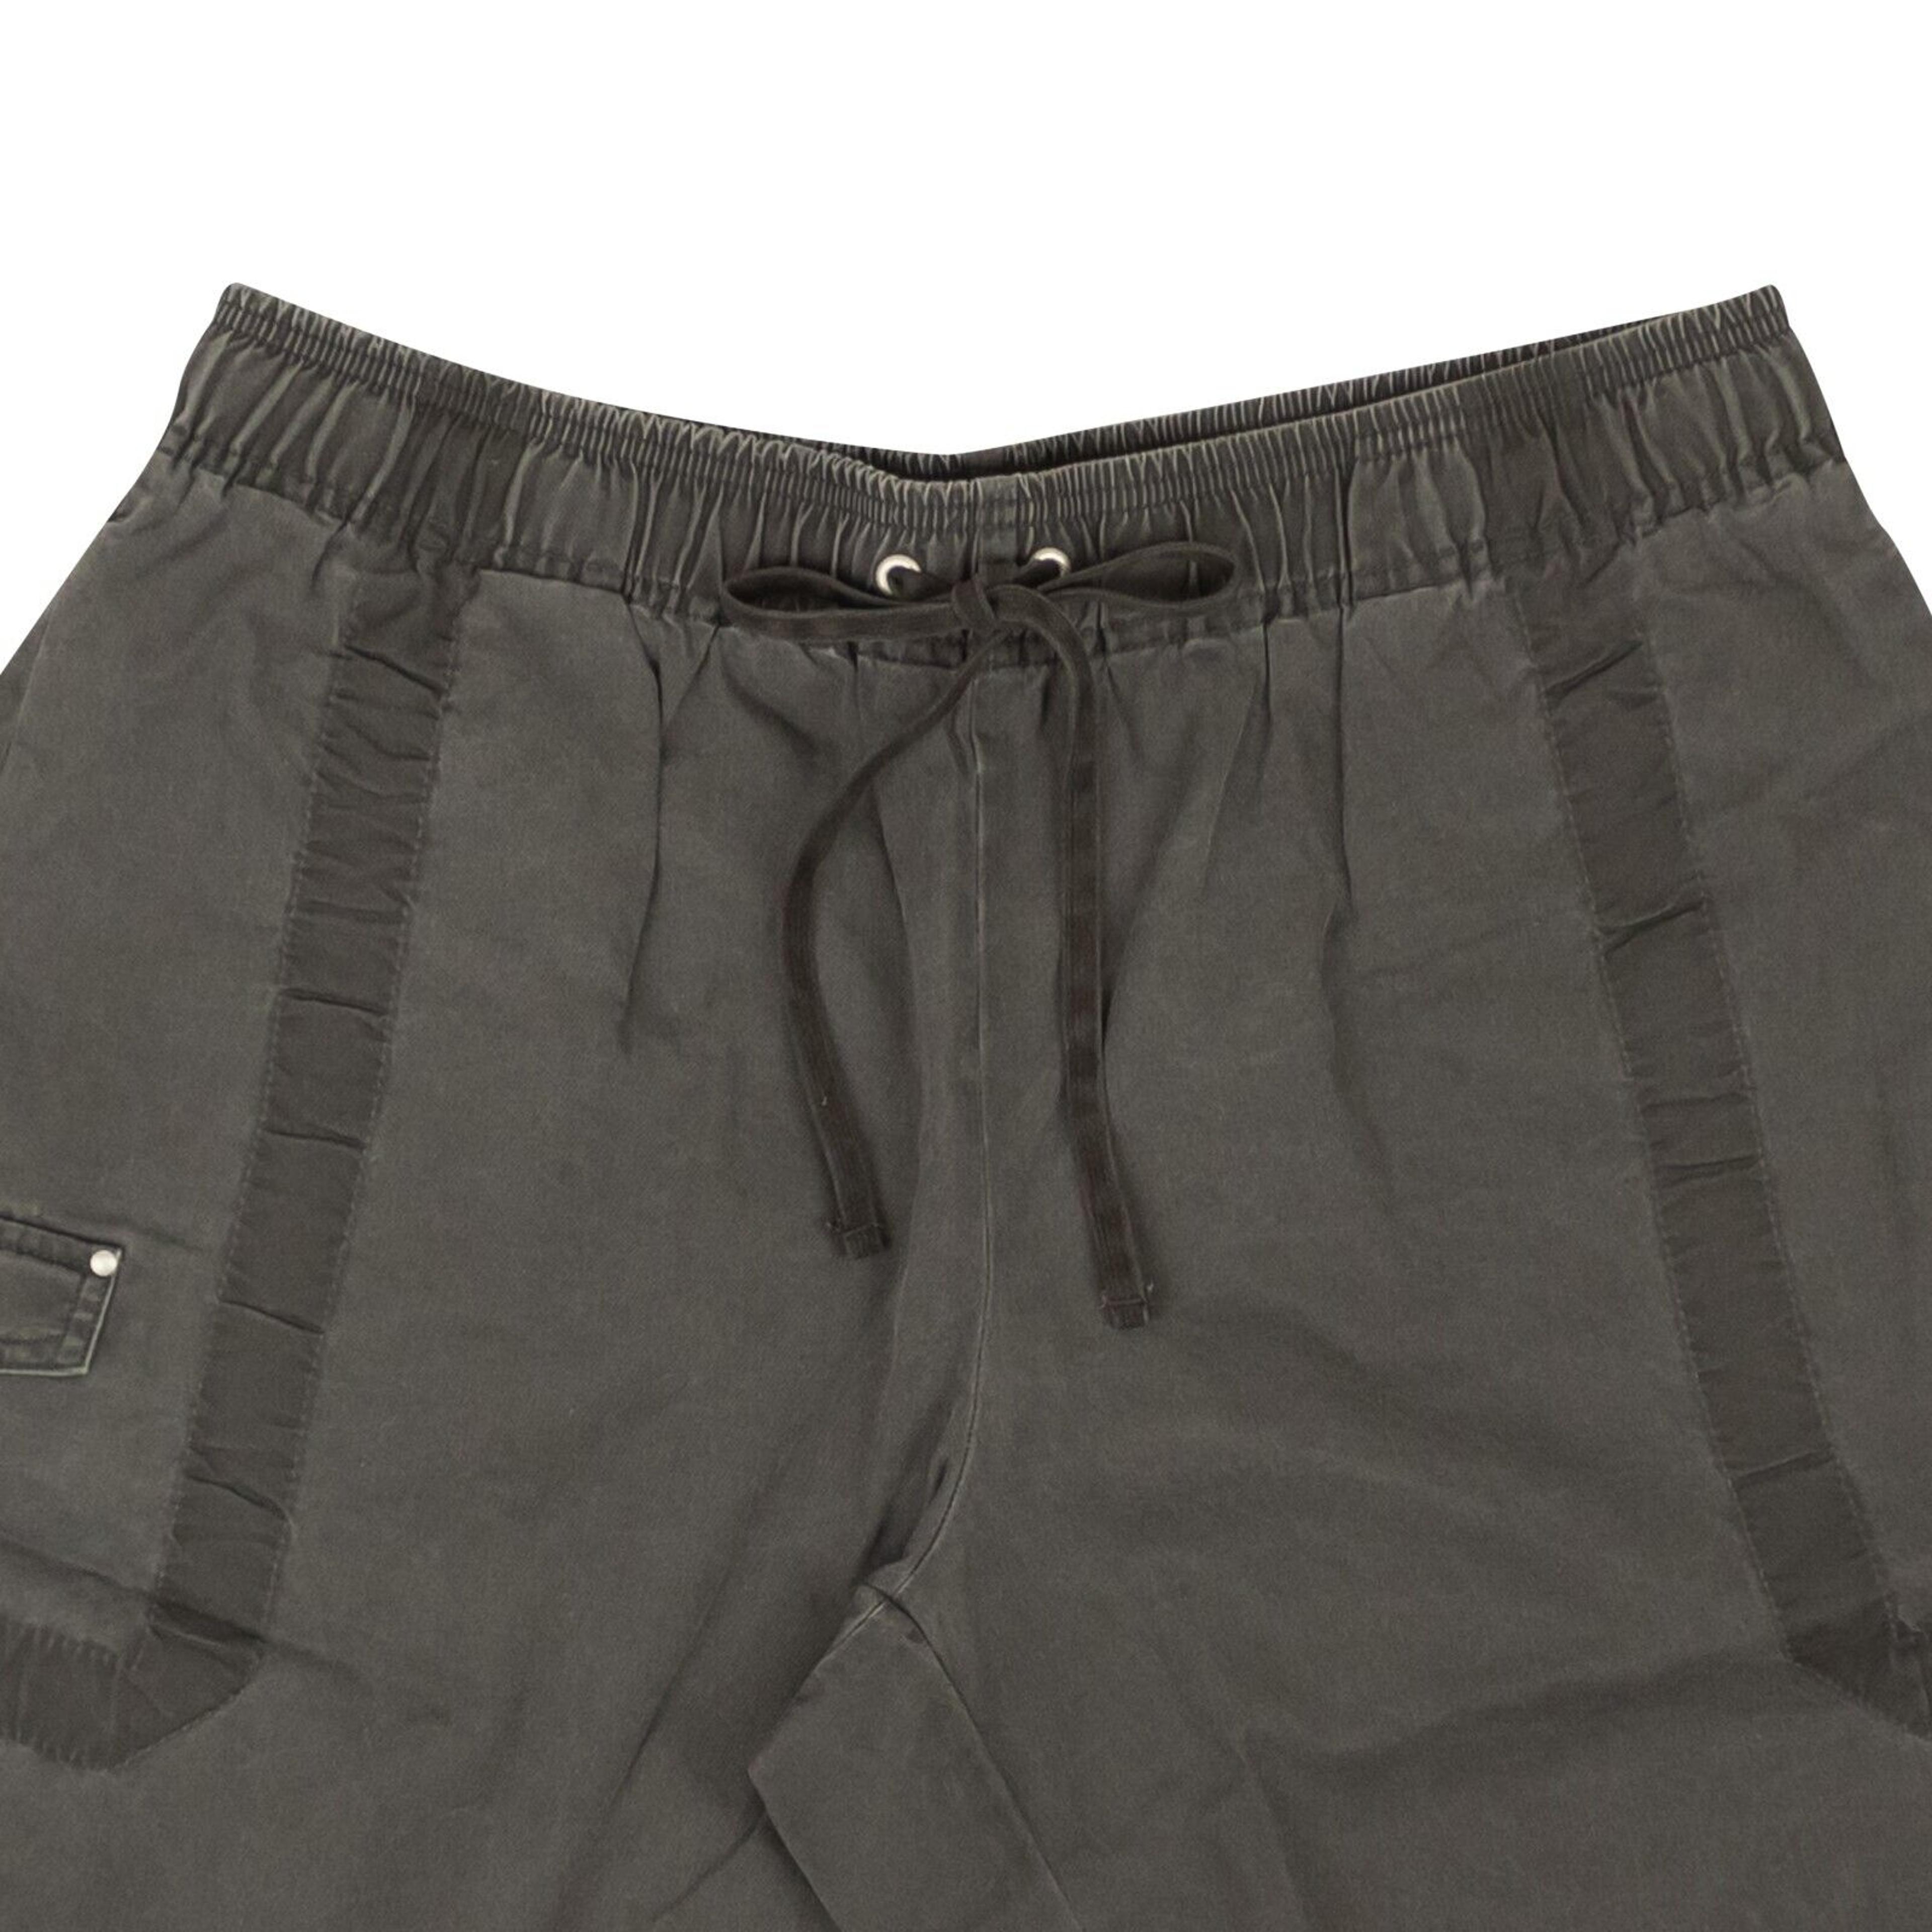 Alternate View 1 of Black Cotton Poplin Frame II Shorts